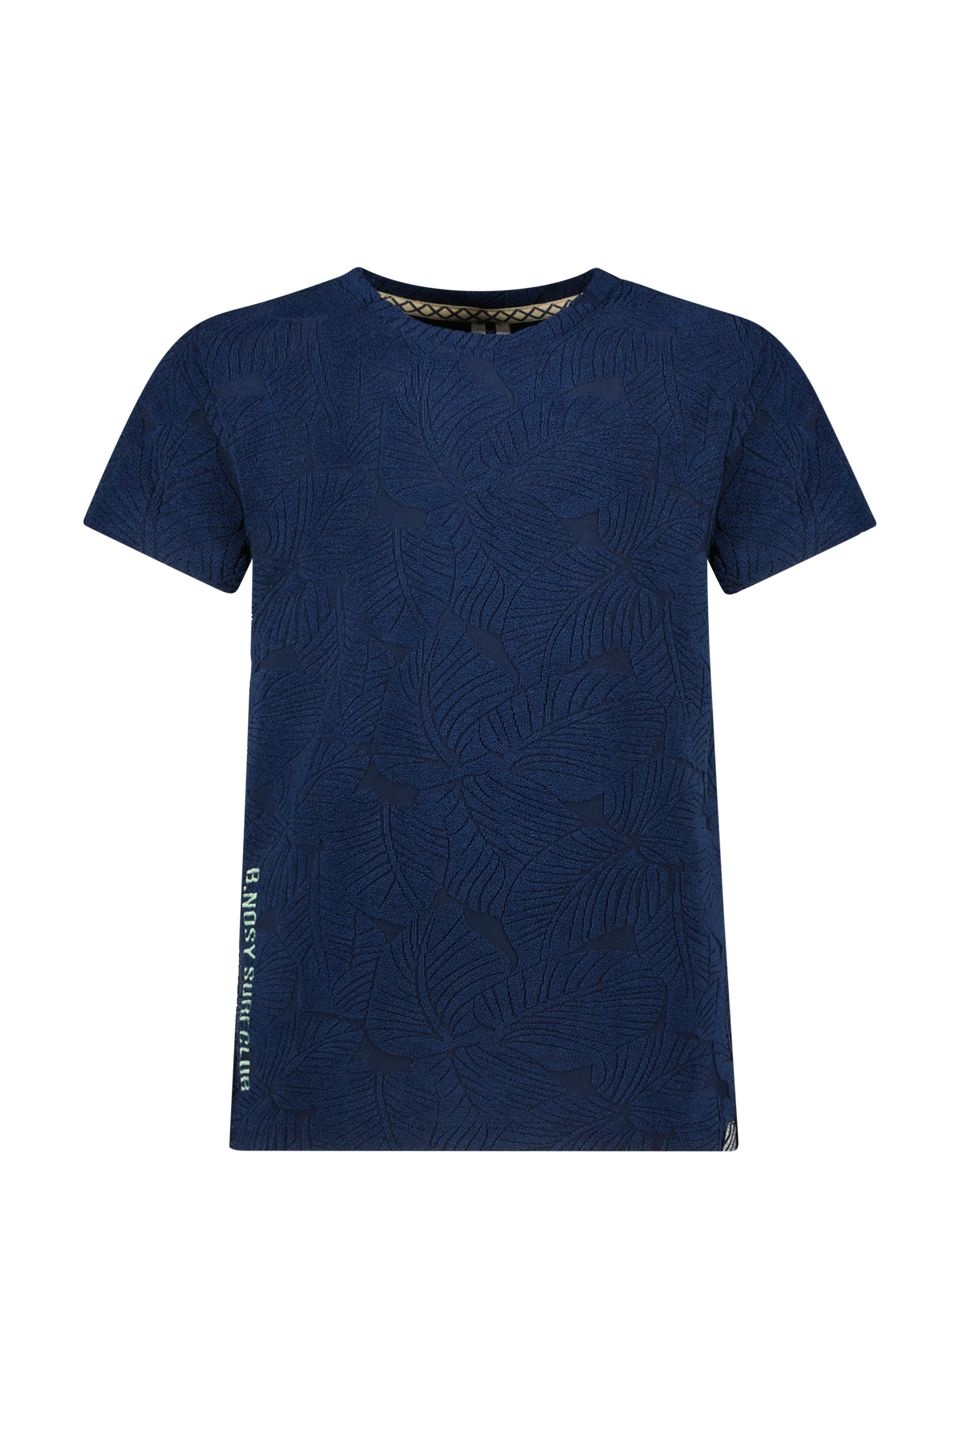 B.Nosy Jongens t-shirt - Milan - Navy blauw